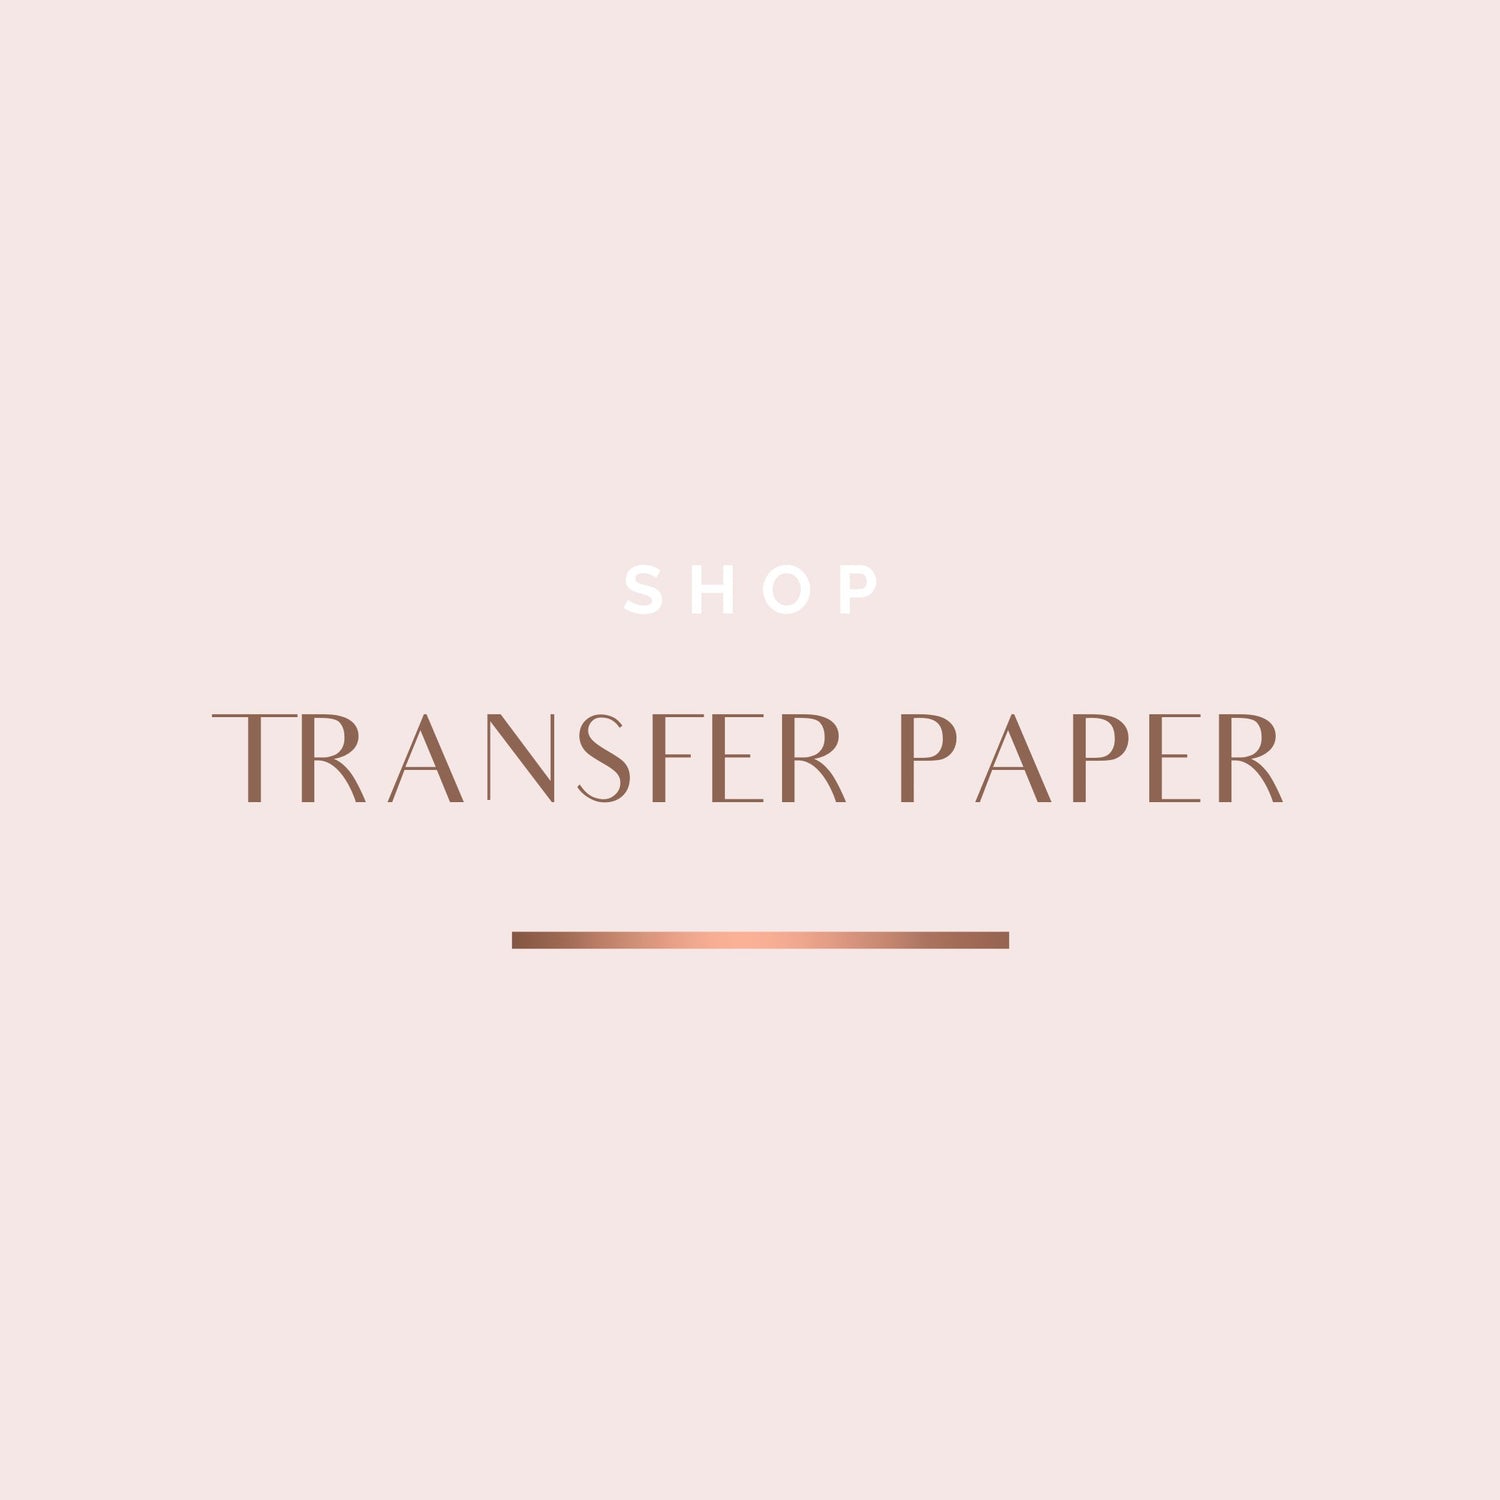 TRANSFER PAPER